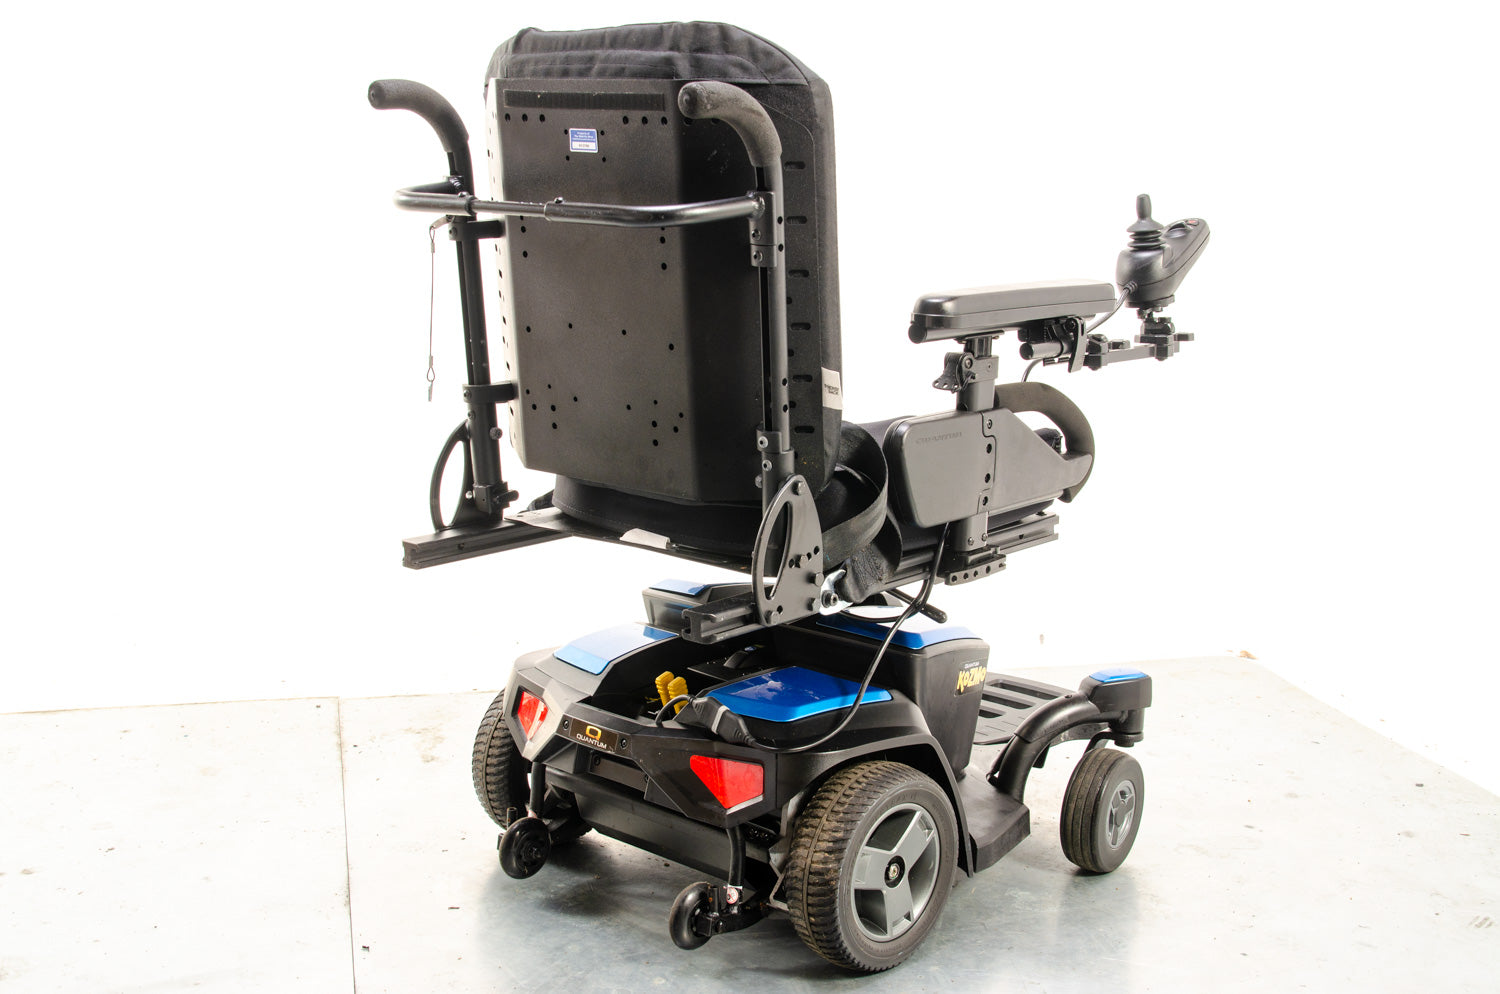 Quantum Kozmo Portable Powerchair Compact Agile Electric Wheelchair Indoor Pride Go-Chair Transportable